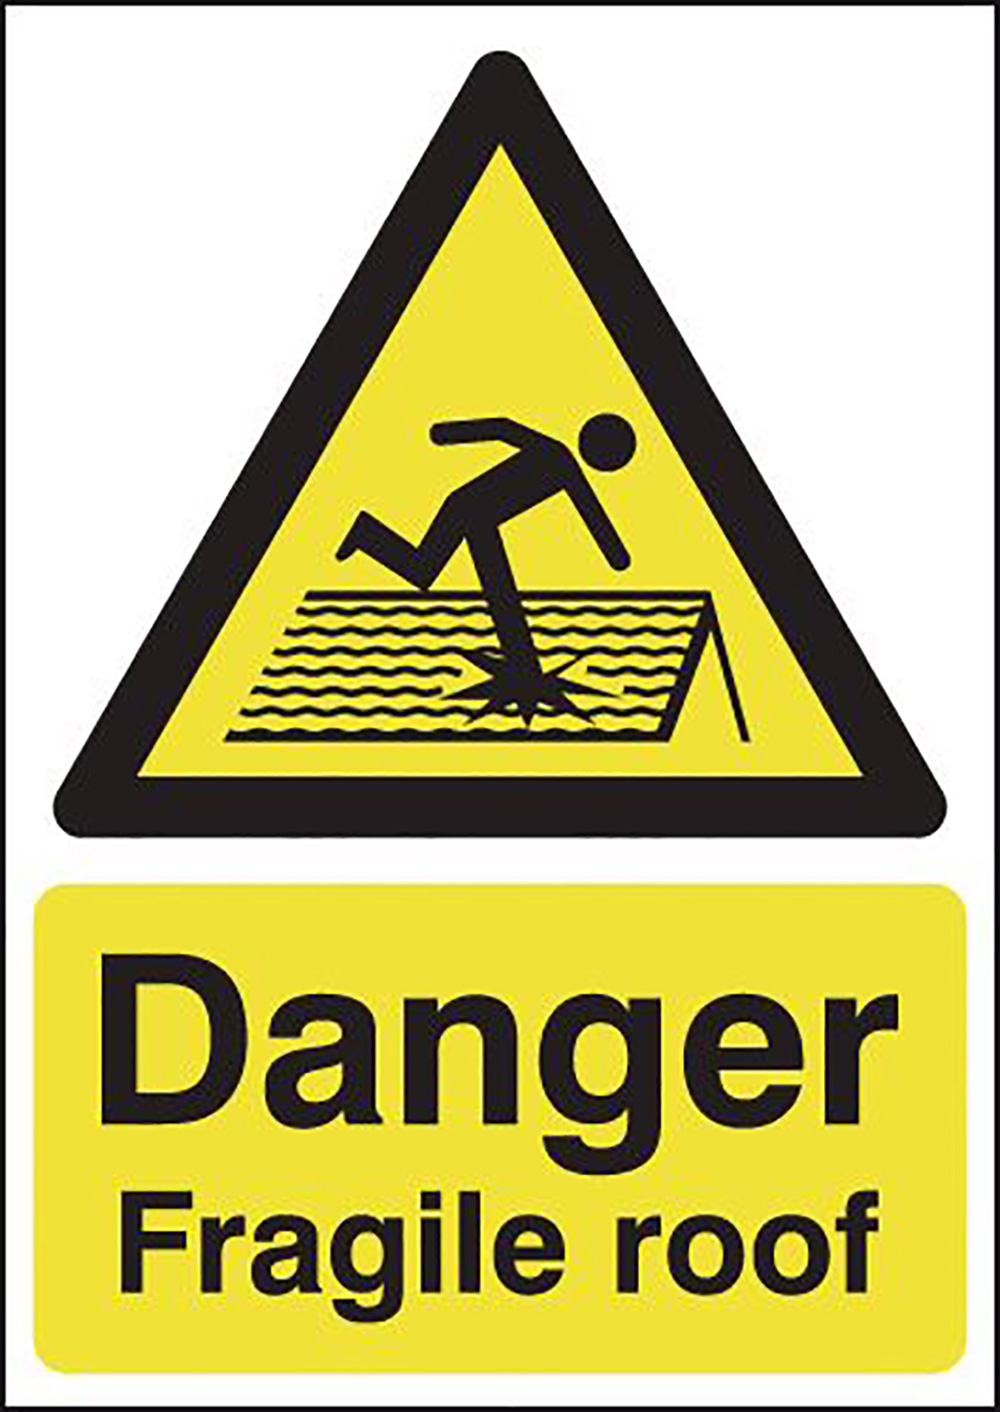 Danger Fragile Roof  210x148mm 1.2mm Rigid Plastic Safety Sign Pack of 6 